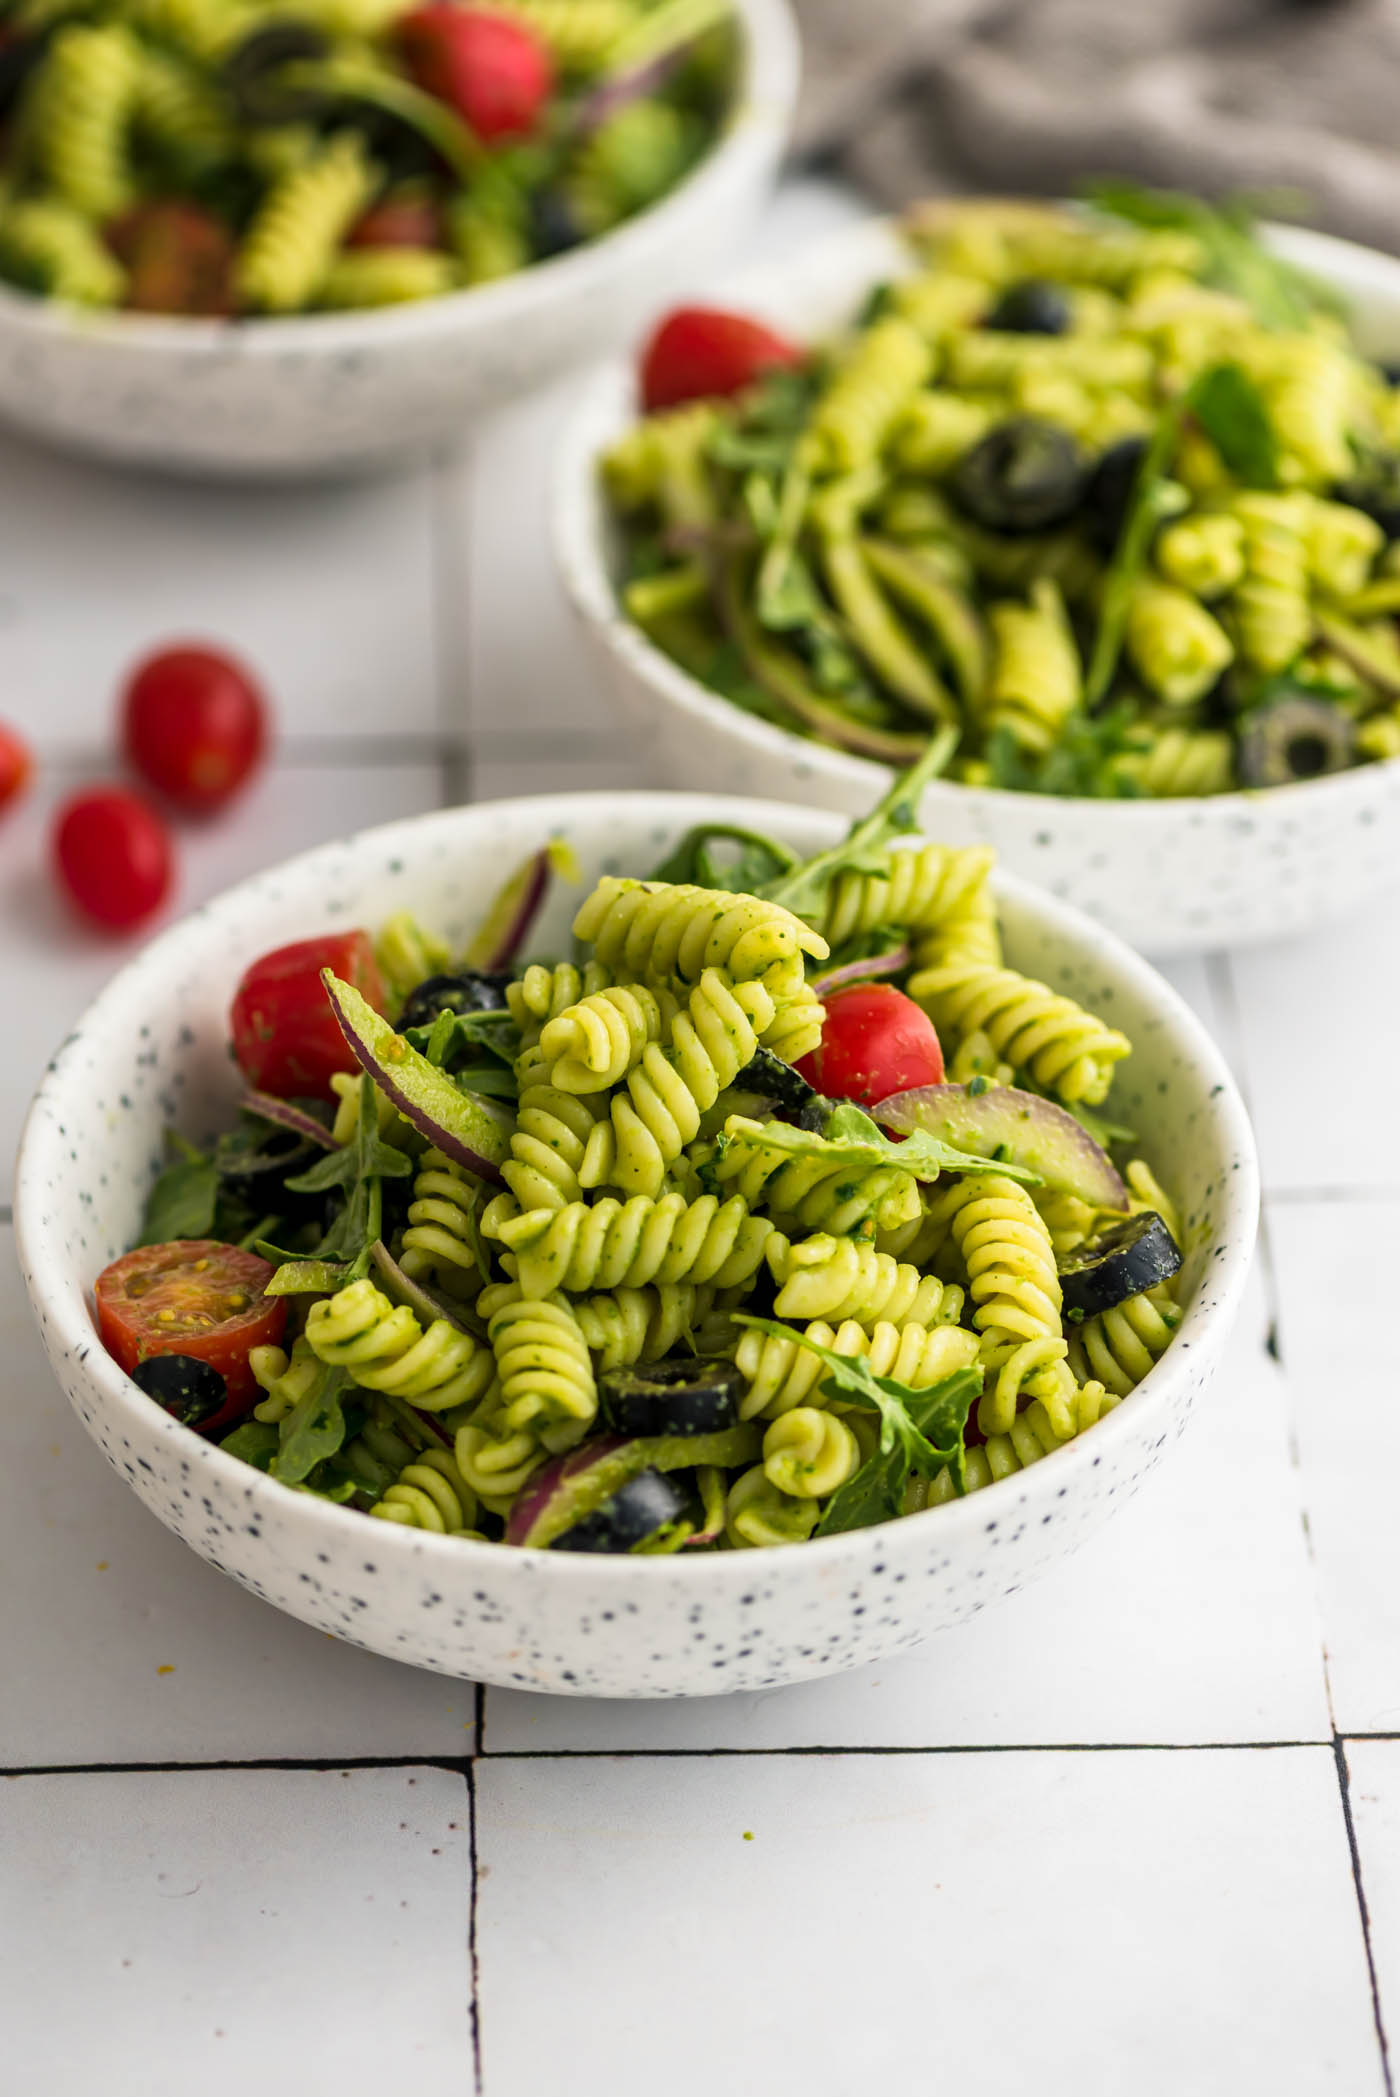 Simple Cold Pesto Pasta Salad | Healthy, Vegan & Perfect for Summer!